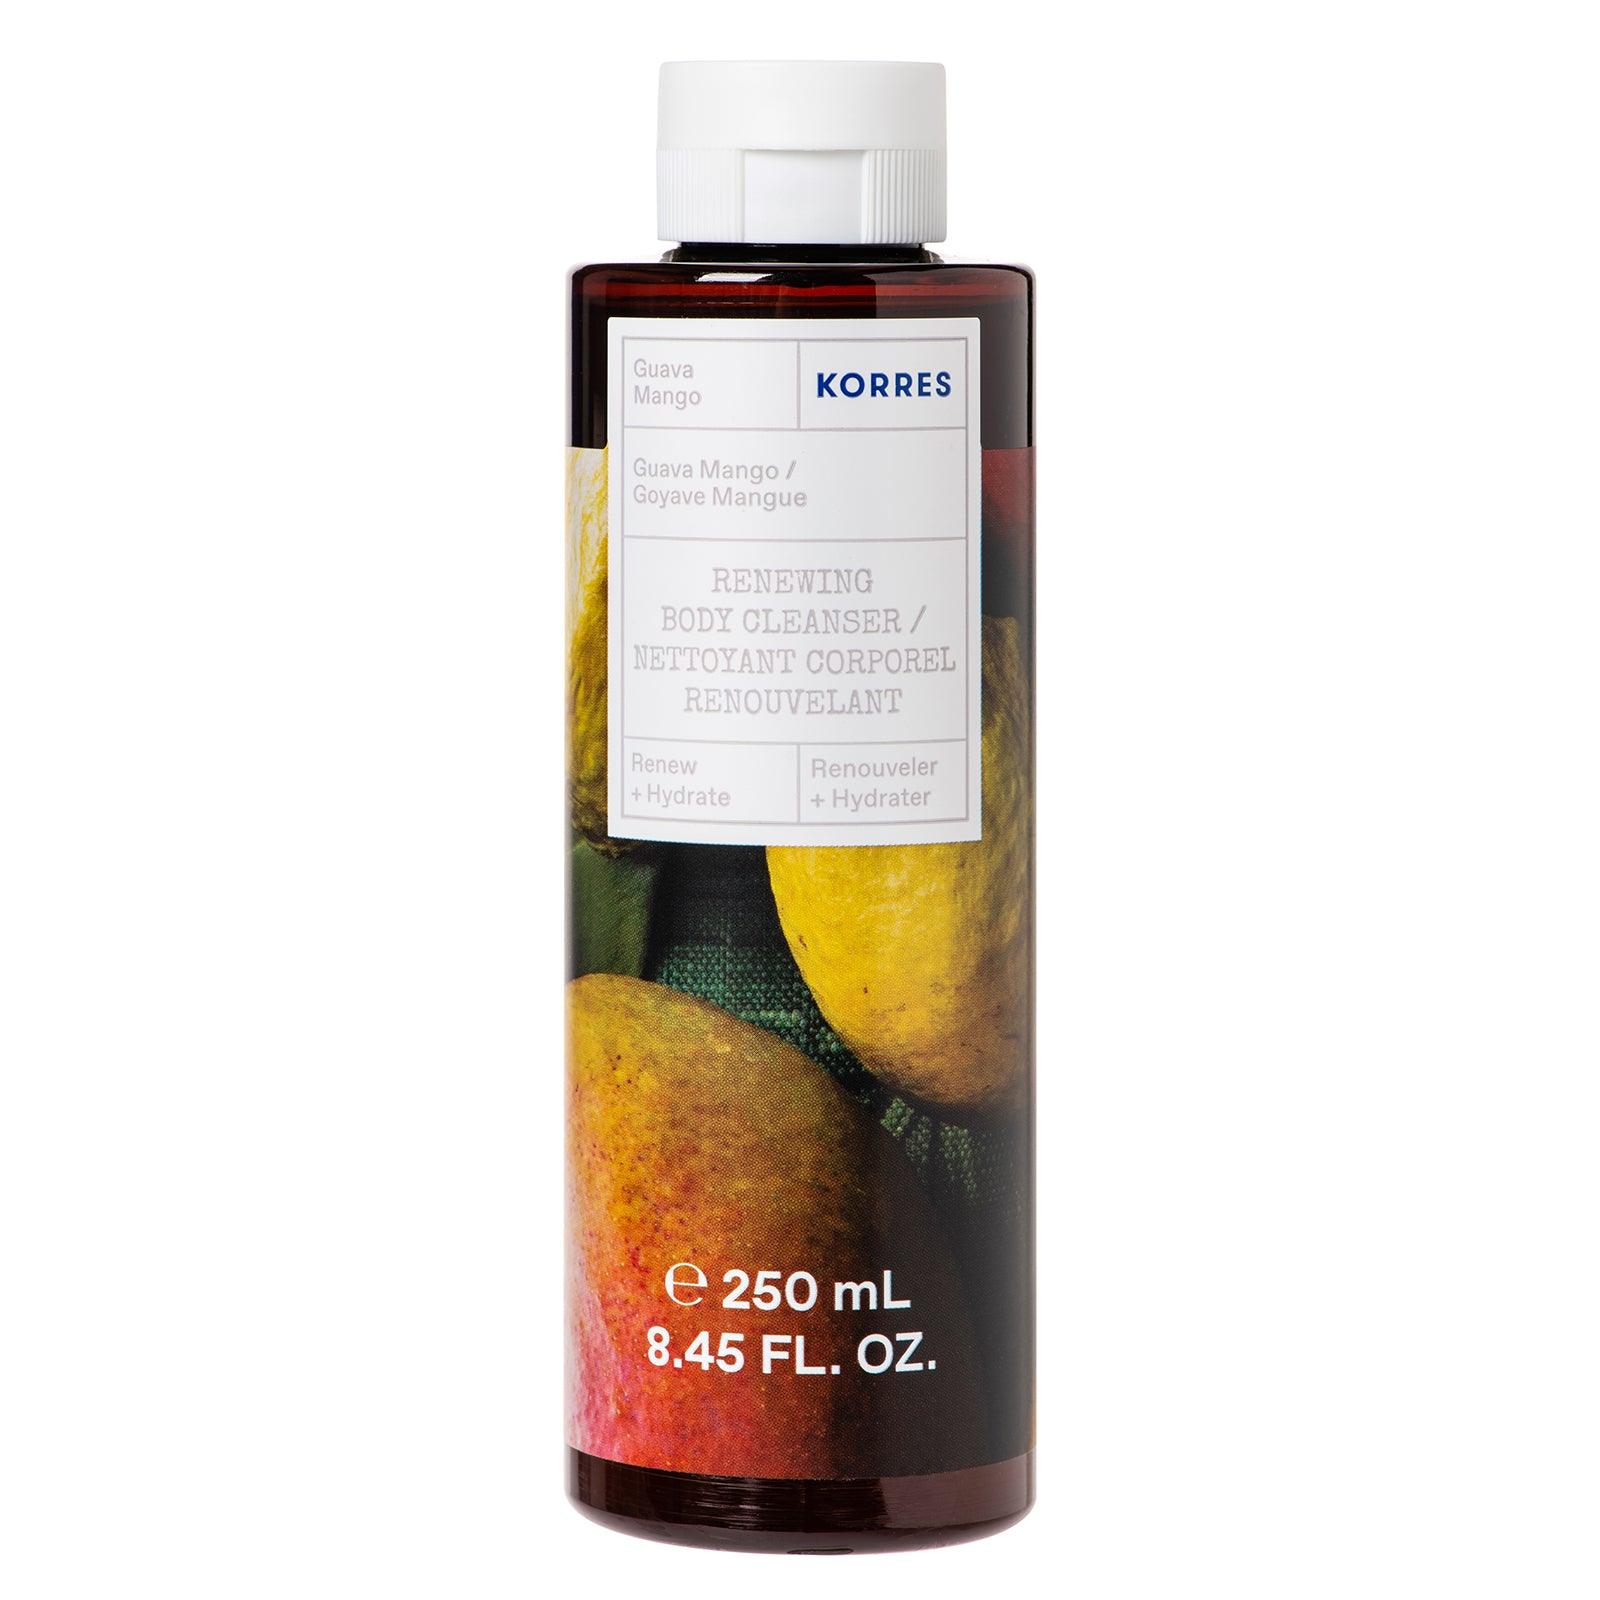 KORRES Guava Mango Renewing Body Cleanser 250ml - Korres